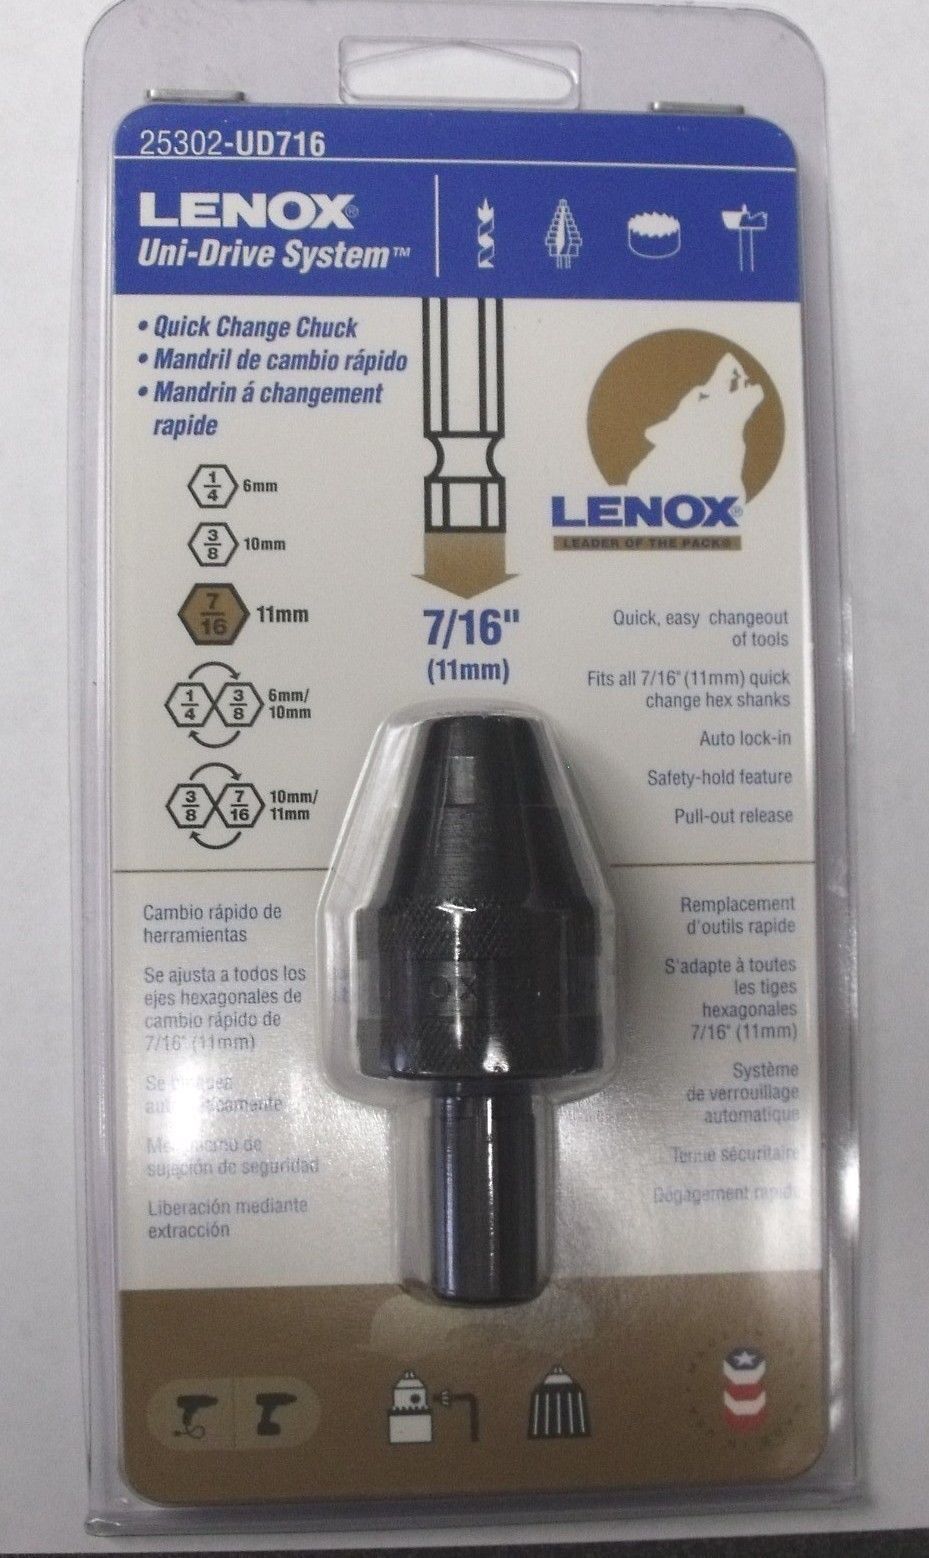 Lenox Uni-Drive 7/16" Quick Change Chuck 25302-UD716 USA